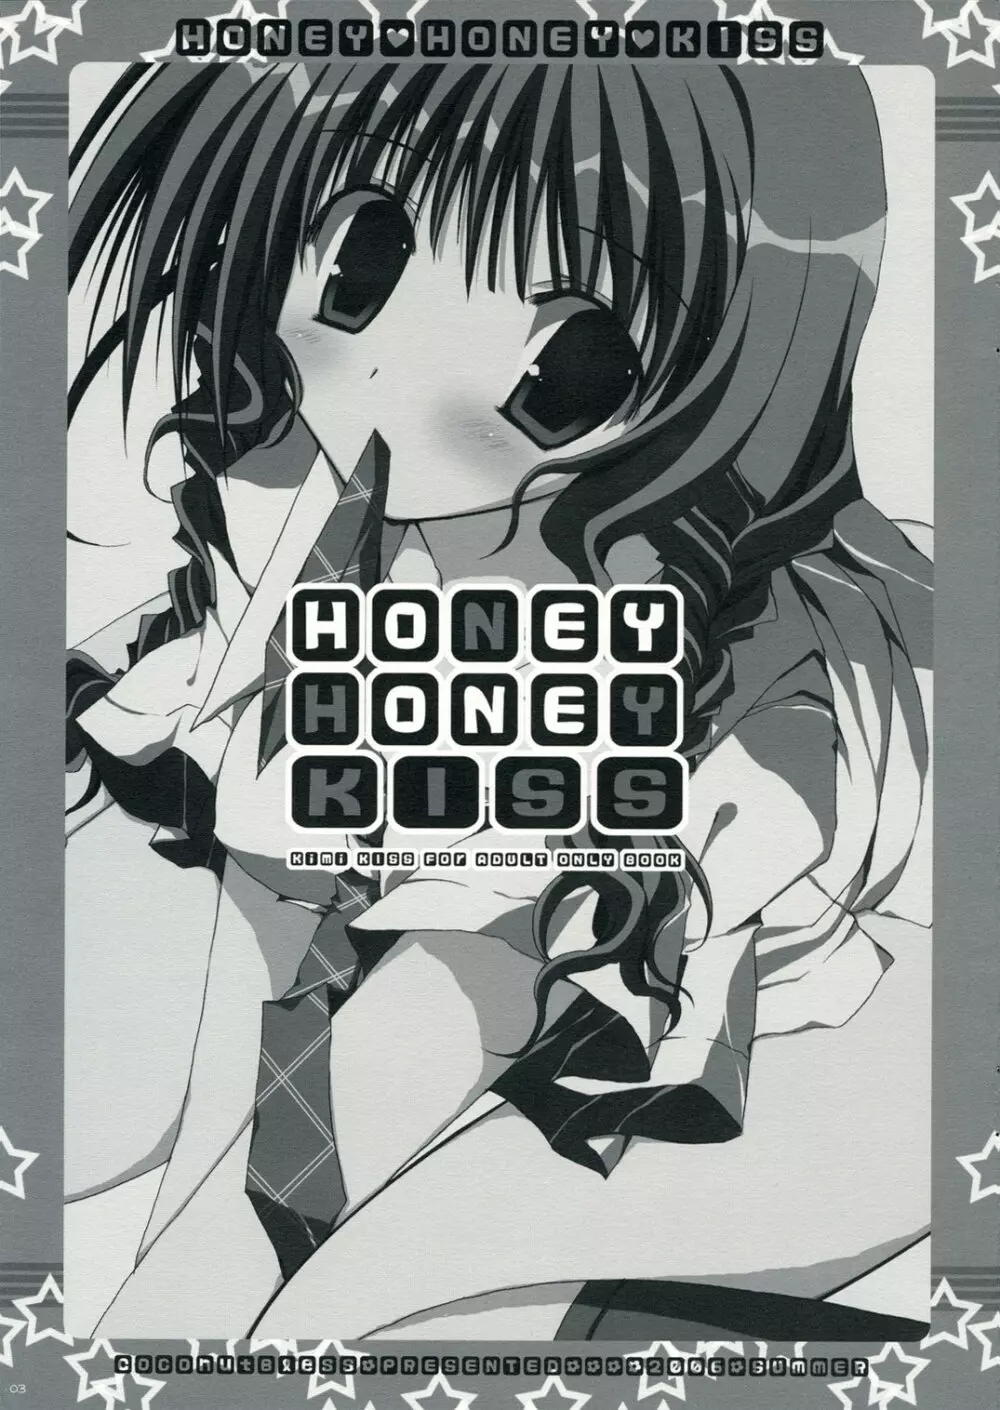 HONEY HONEY KISS - page2